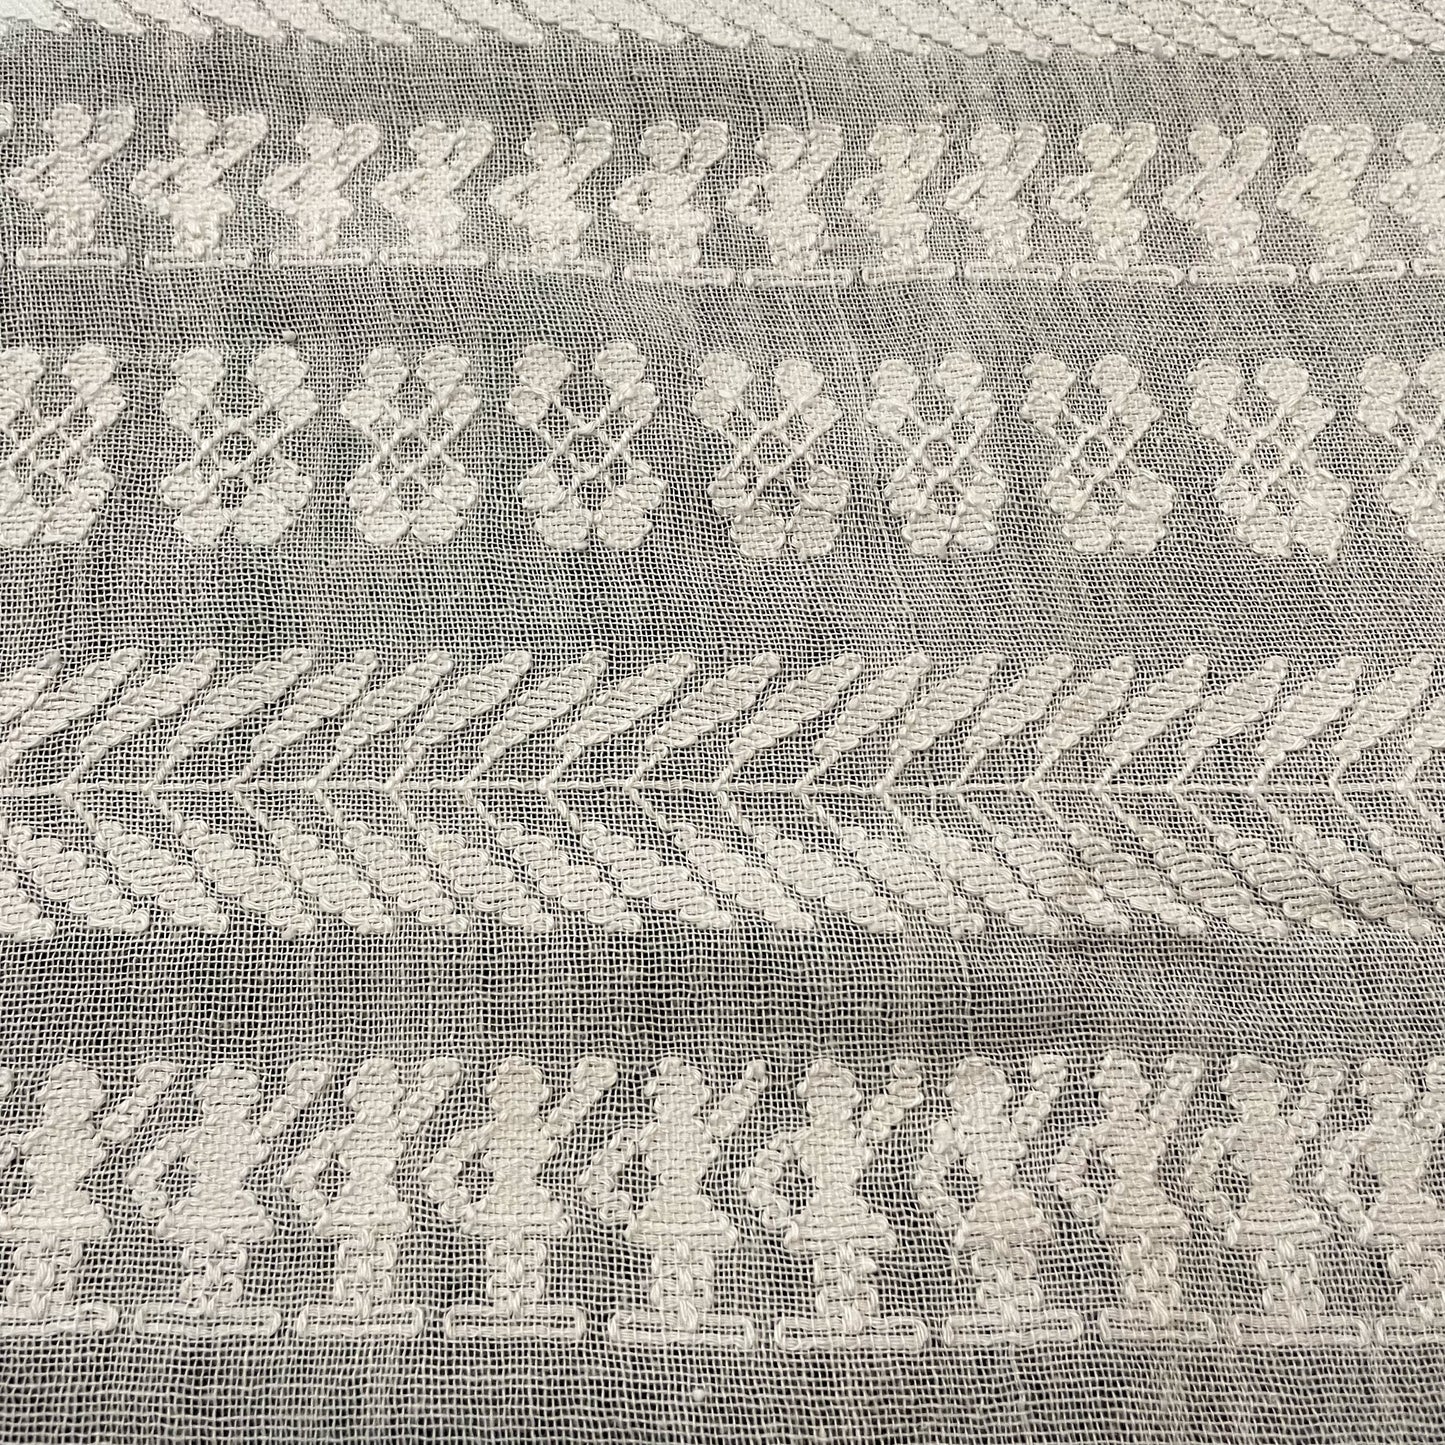 Guatemala, Concepcion Poou Coy Tharin, Back Strap Weaving & Whitework Brocade